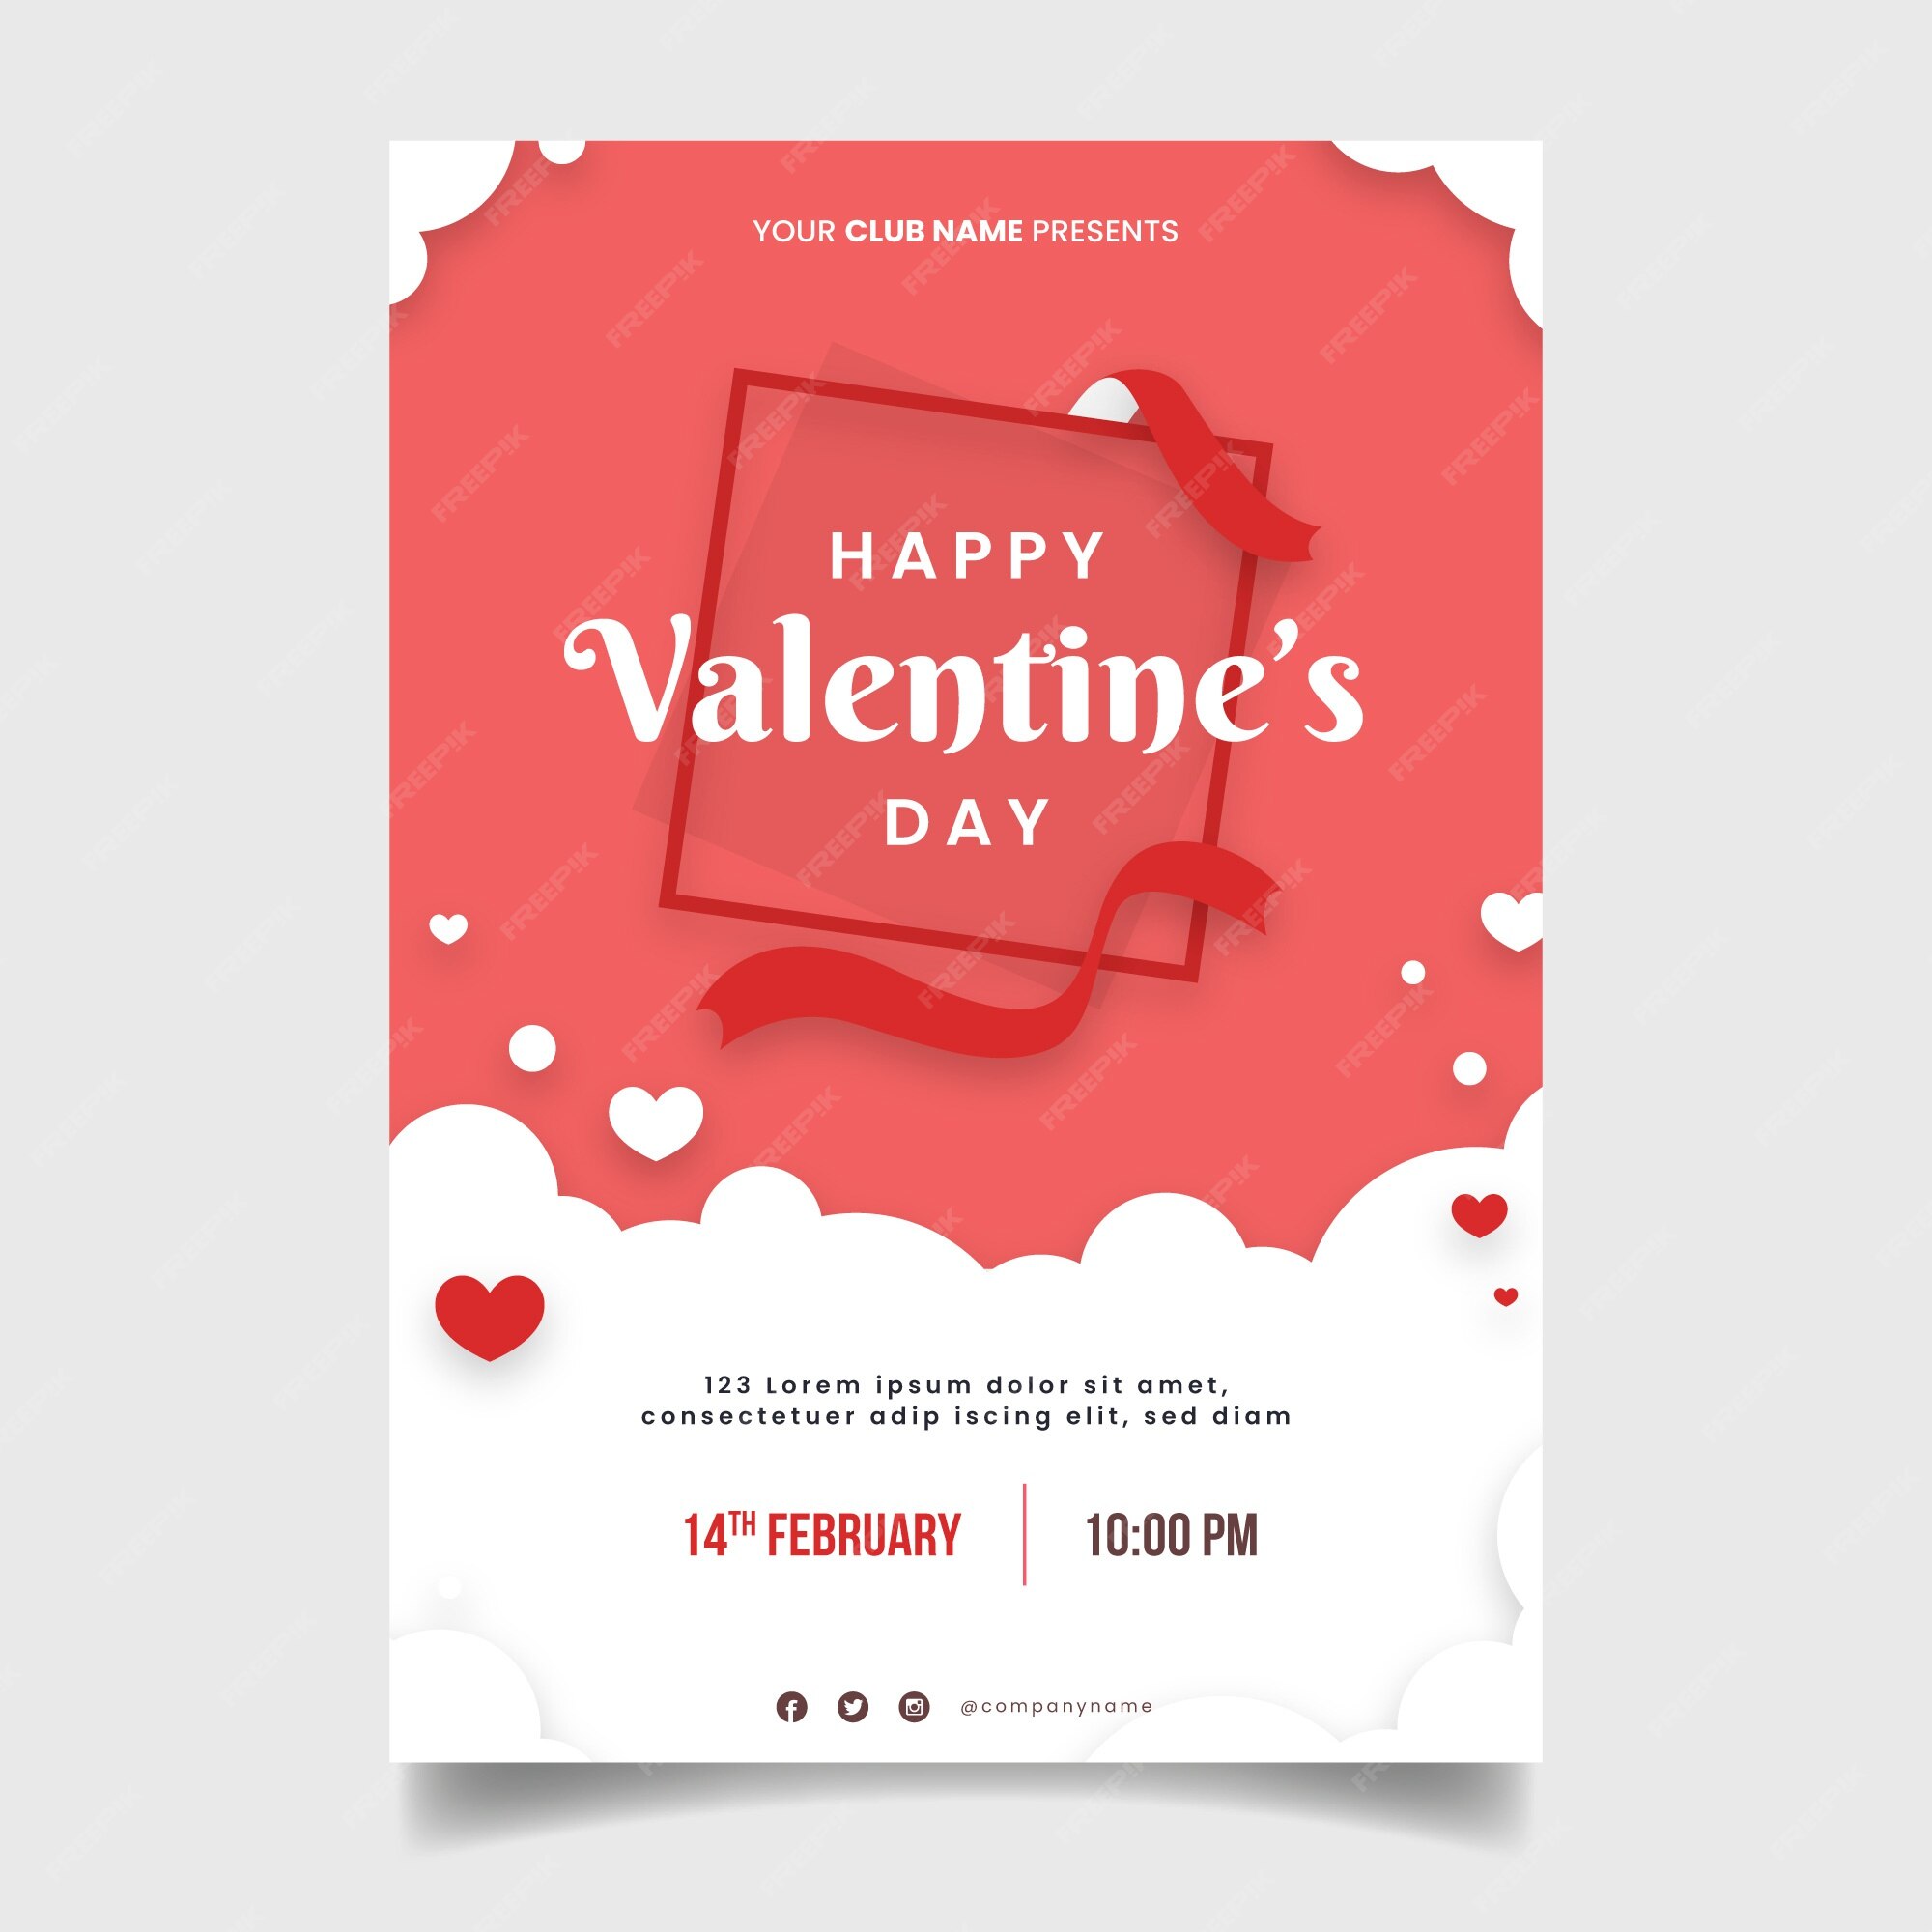 Valentine Poster Images - Free Download on Freepik